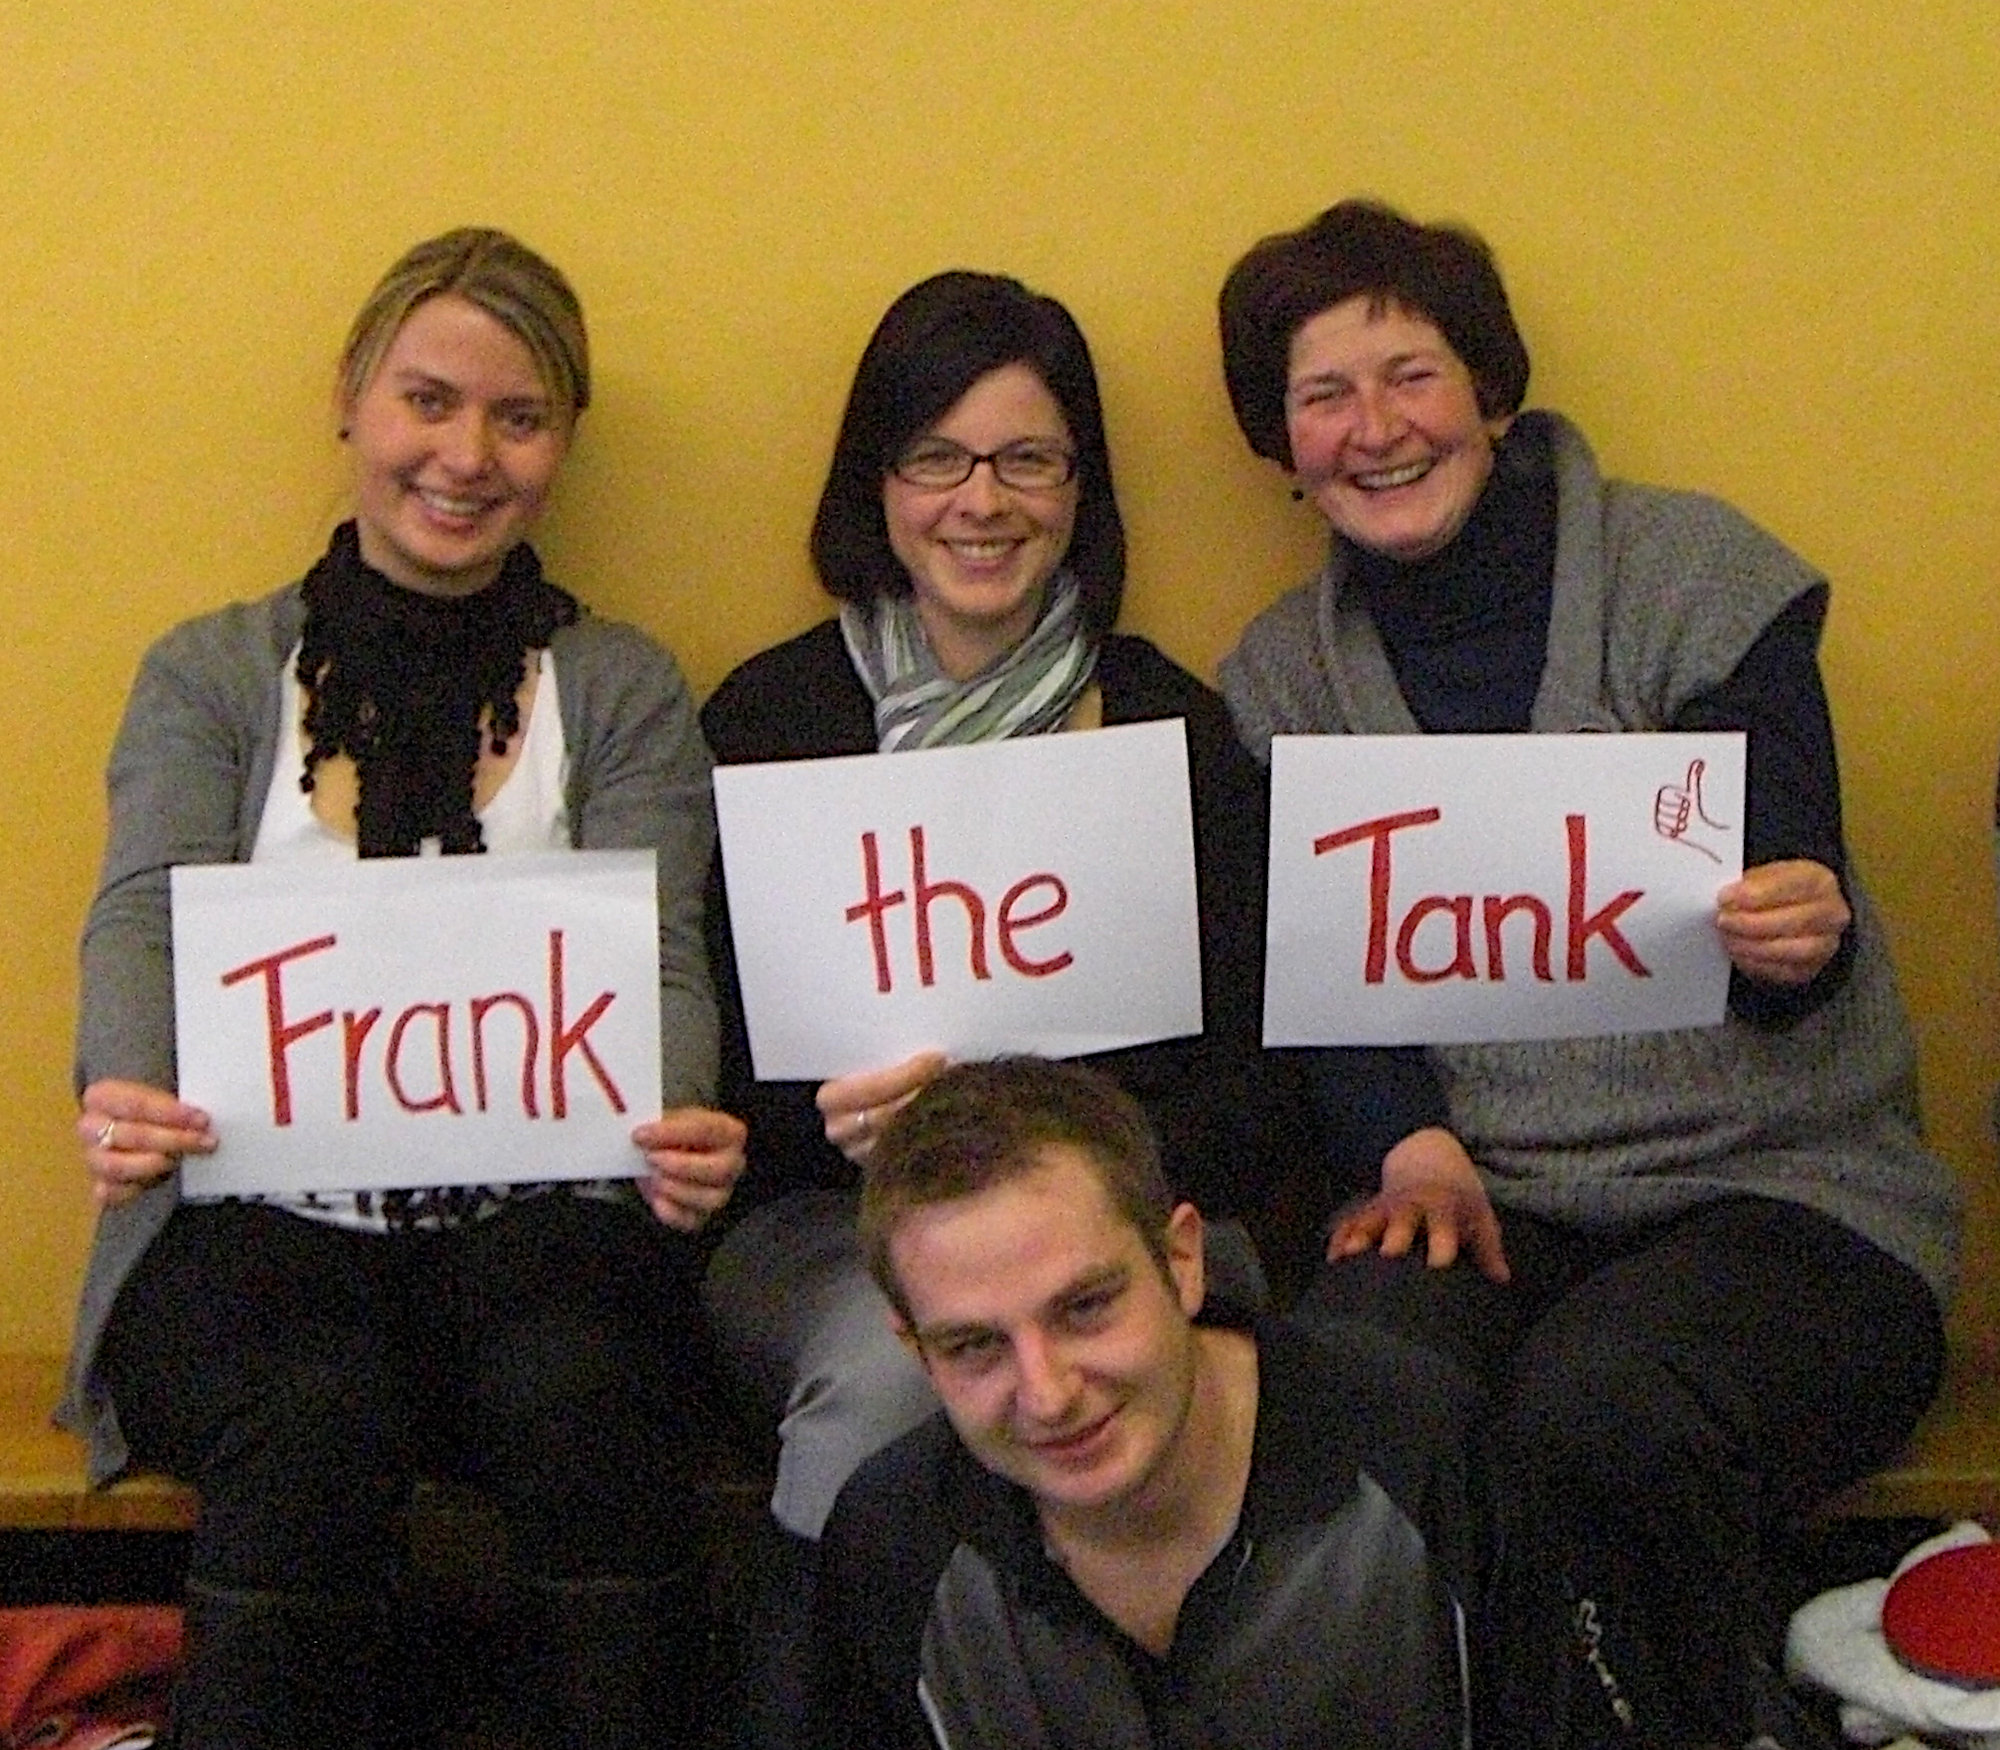 Frank the tank